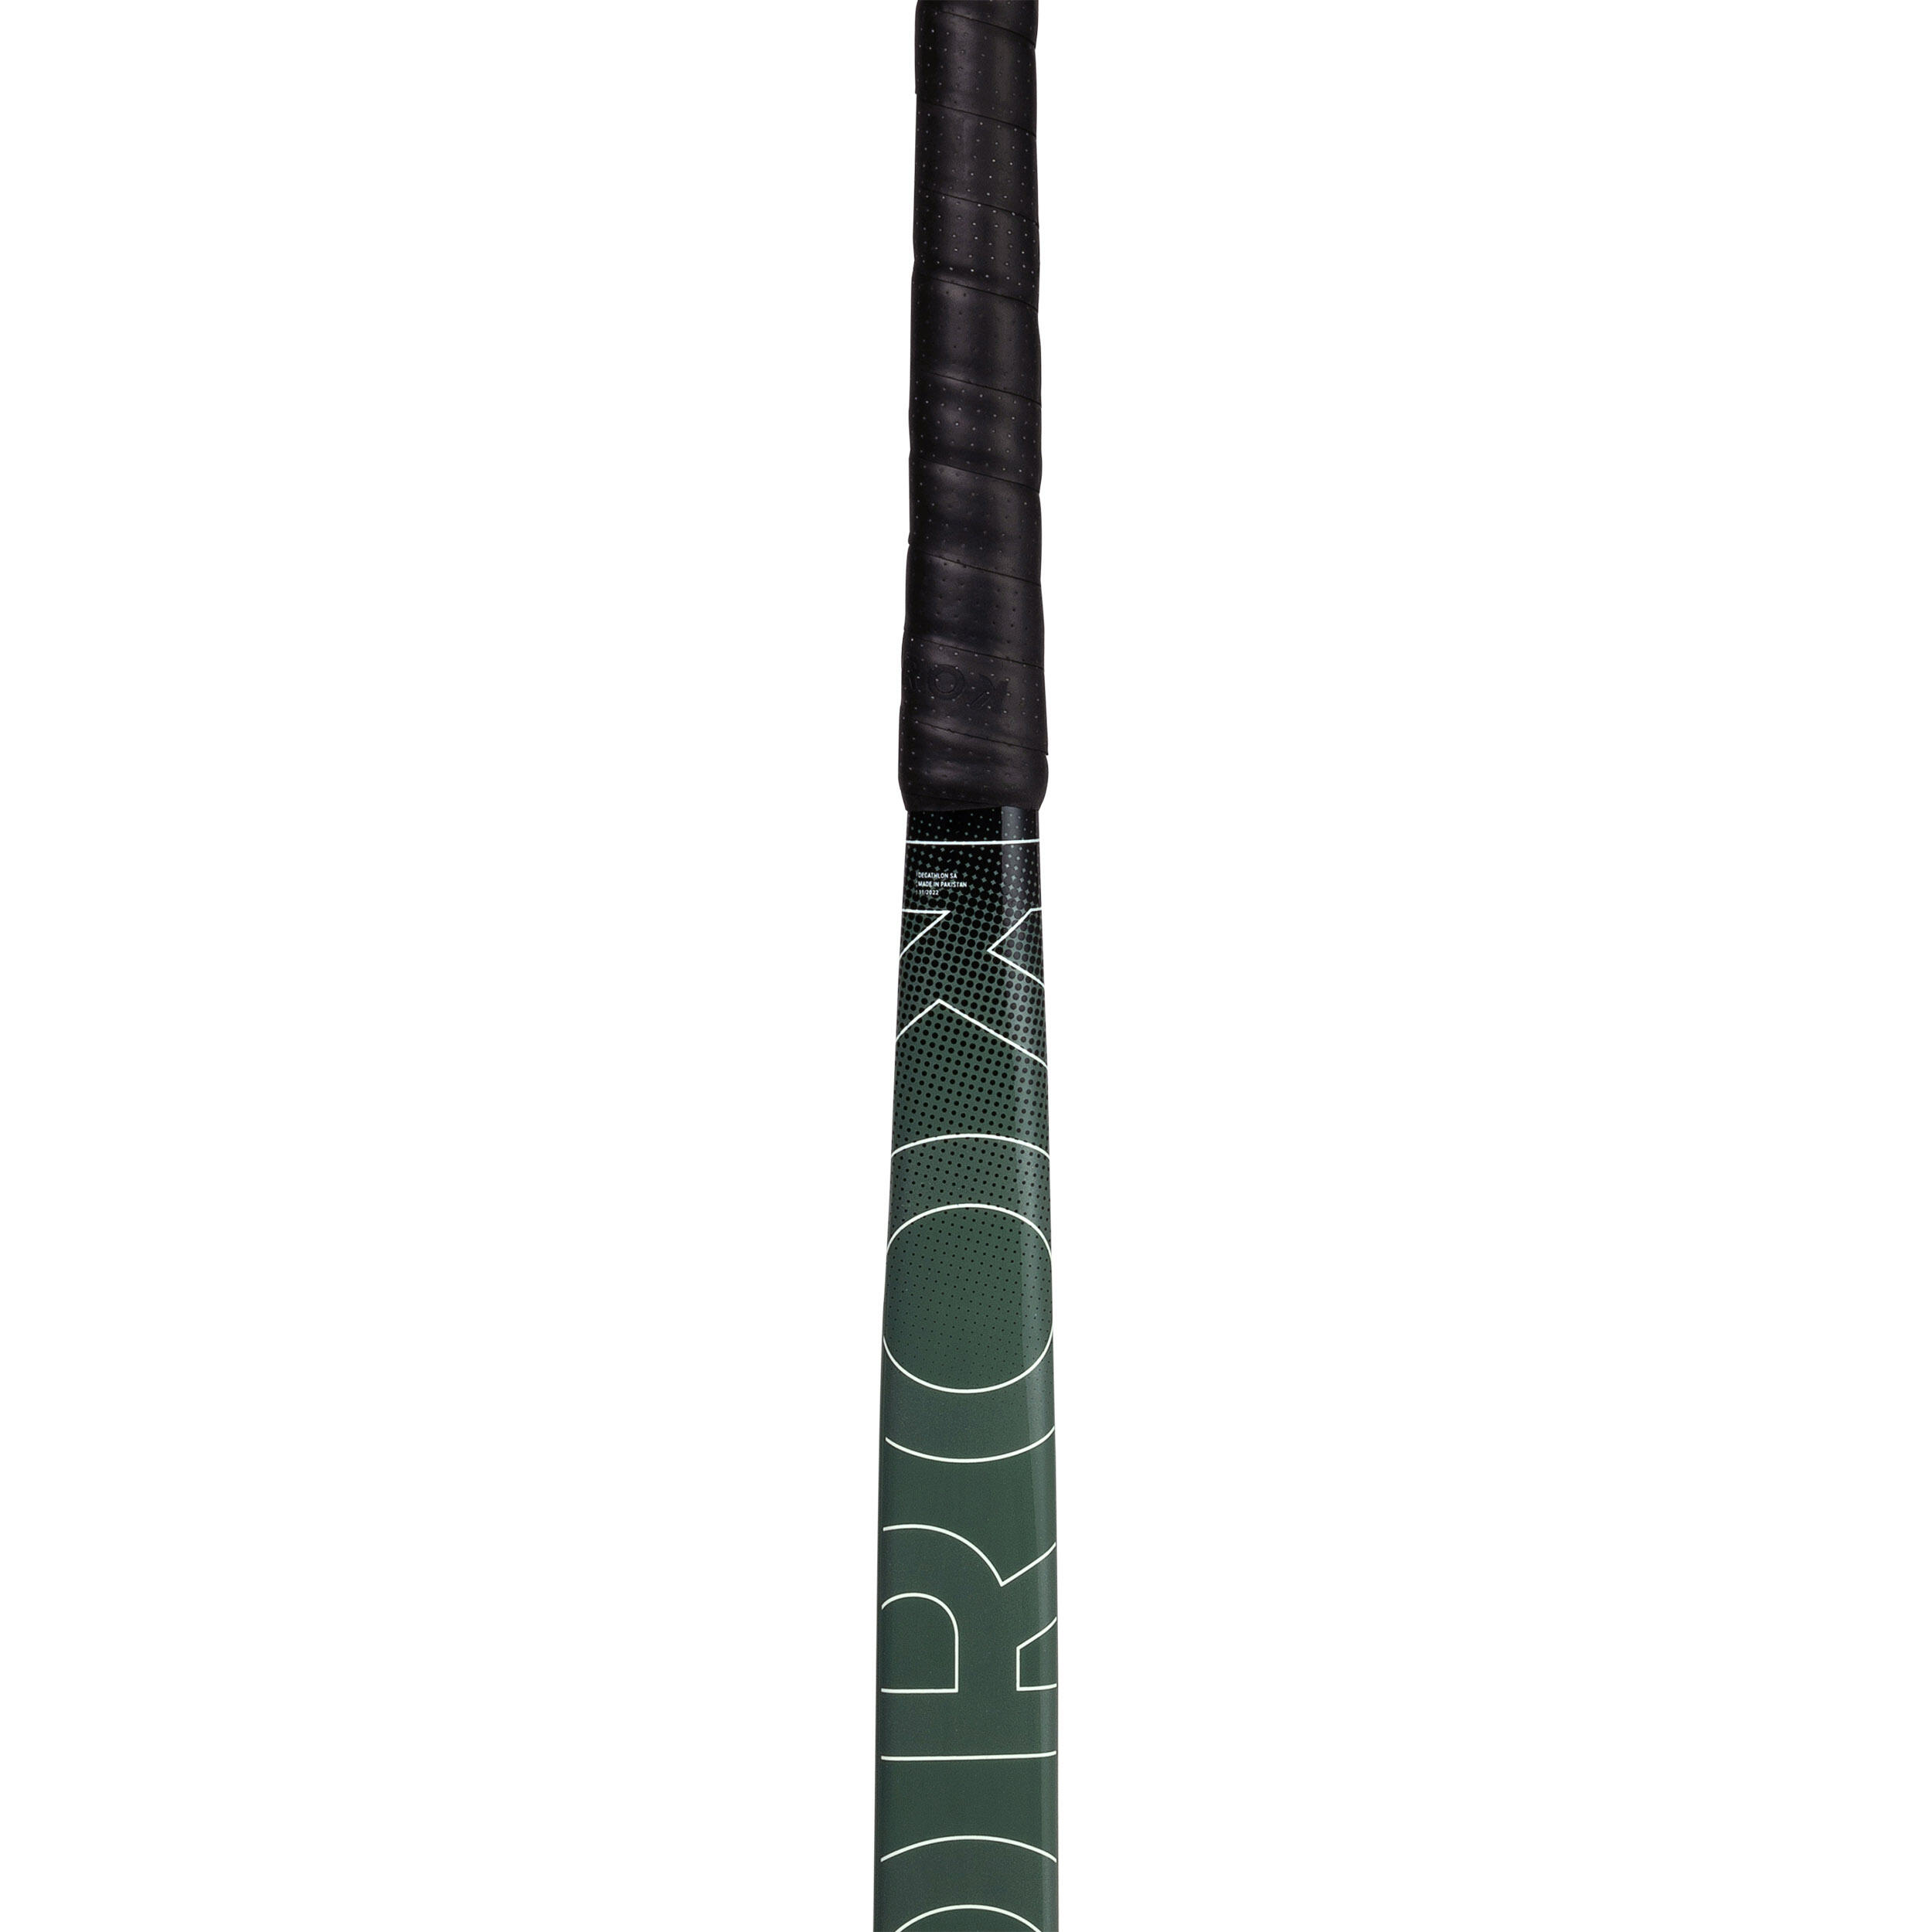 Adult Intermediate 30% Carbon Mid Bow Field Hockey Stick FH530 - Khaki/Black 11/12